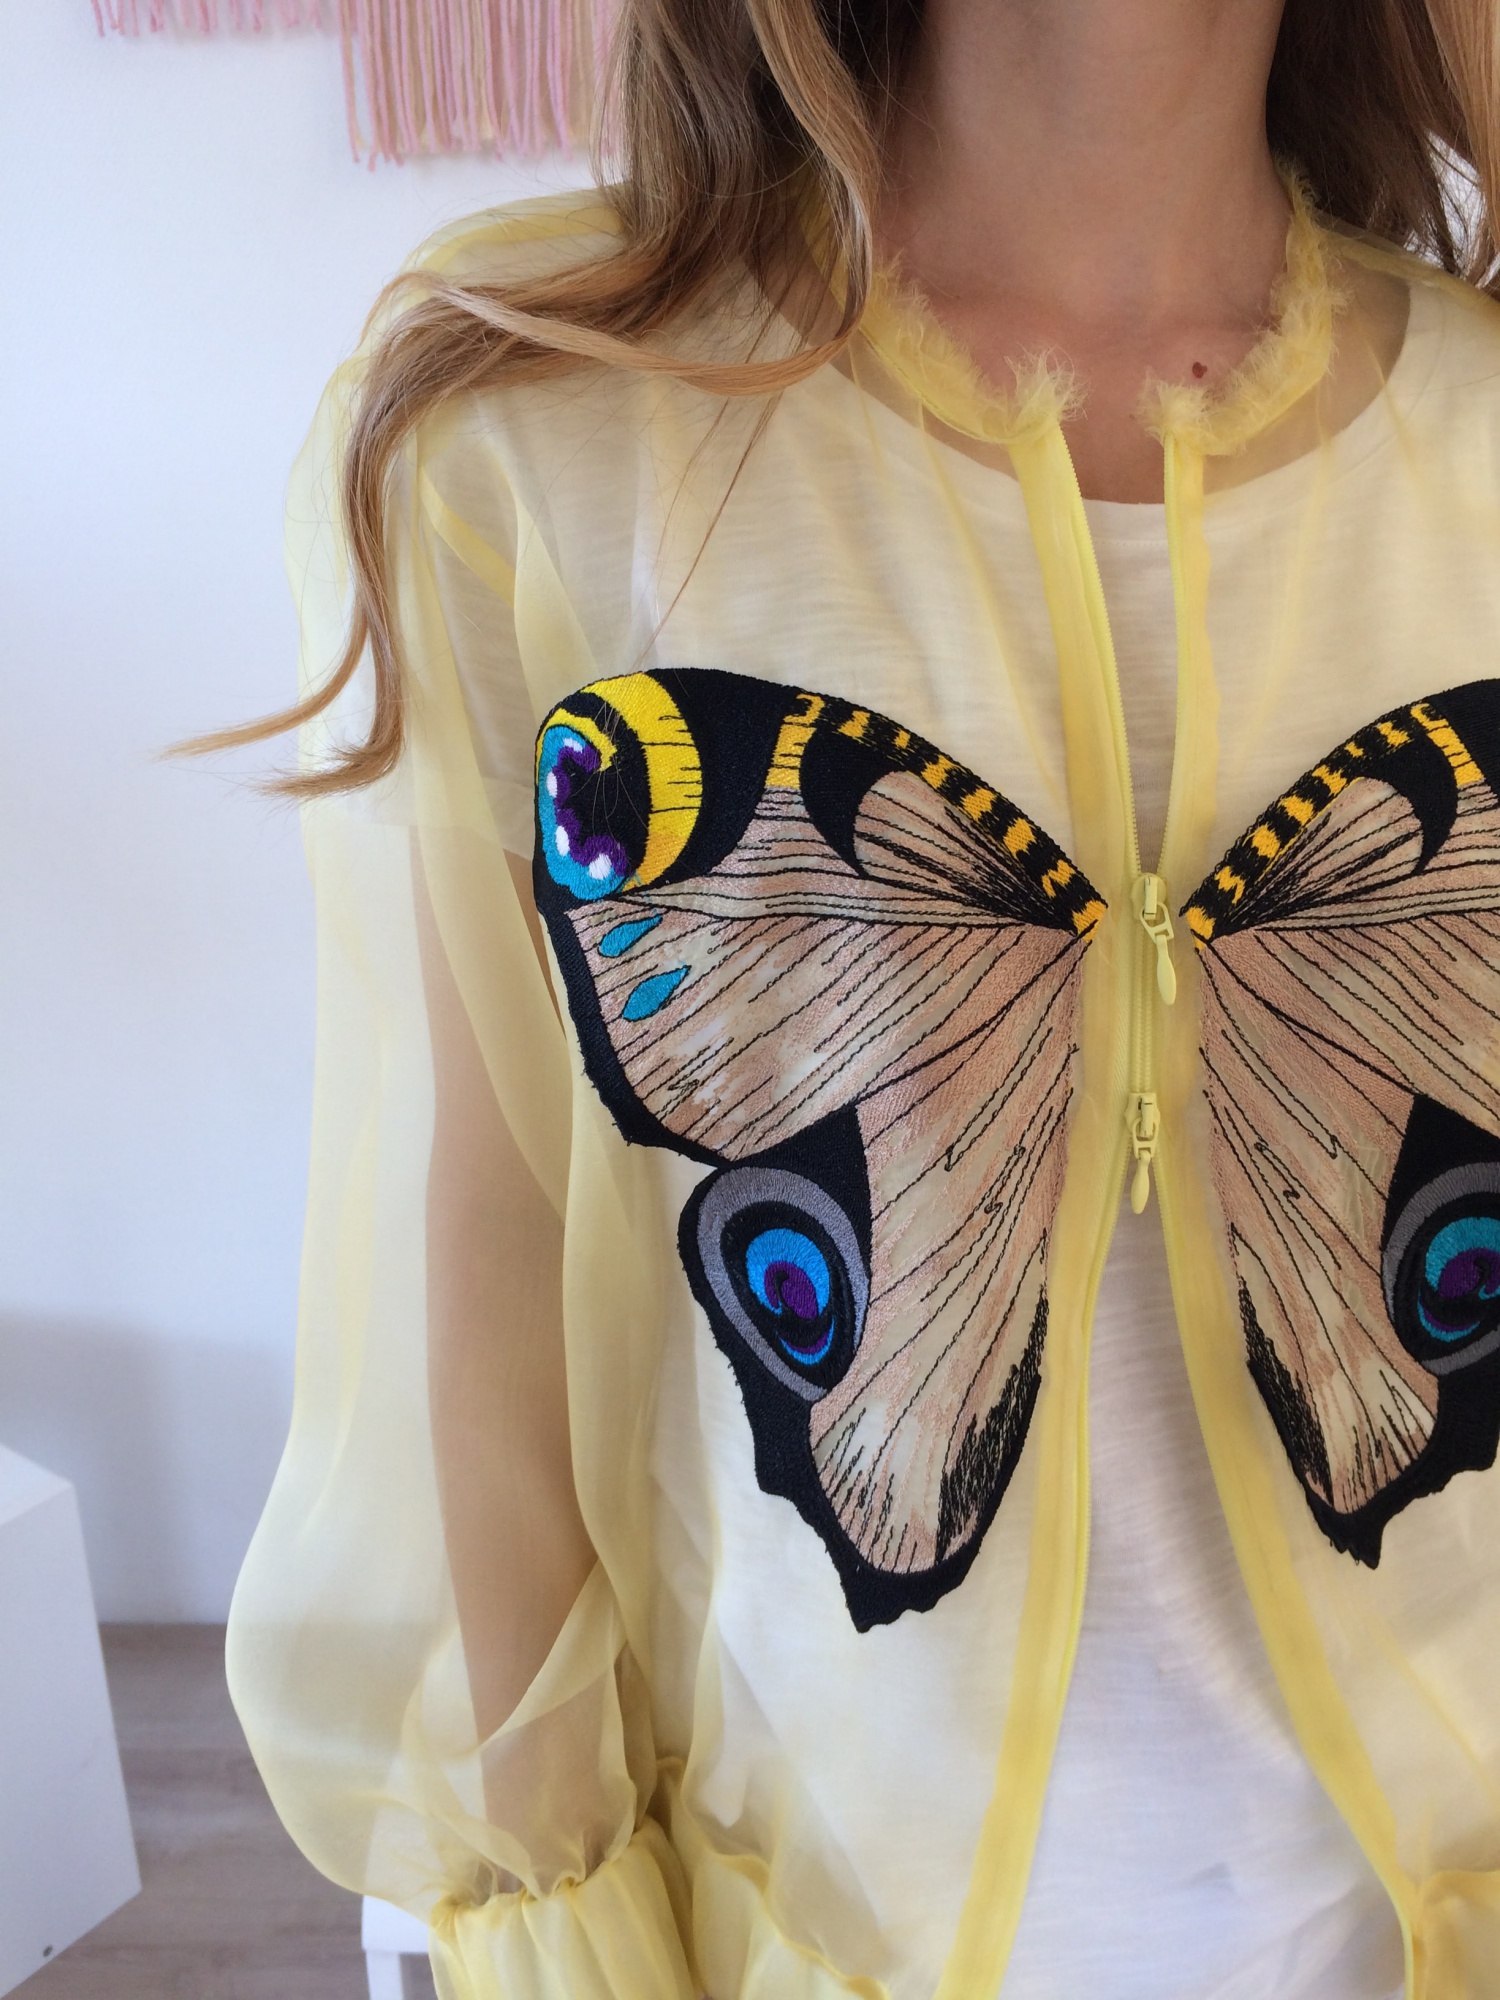 Блузка бабочка. Кофточка с бабочкой. Вышитые бабочки на одежде. Блузка с бабочками. Кофта с бабочками.